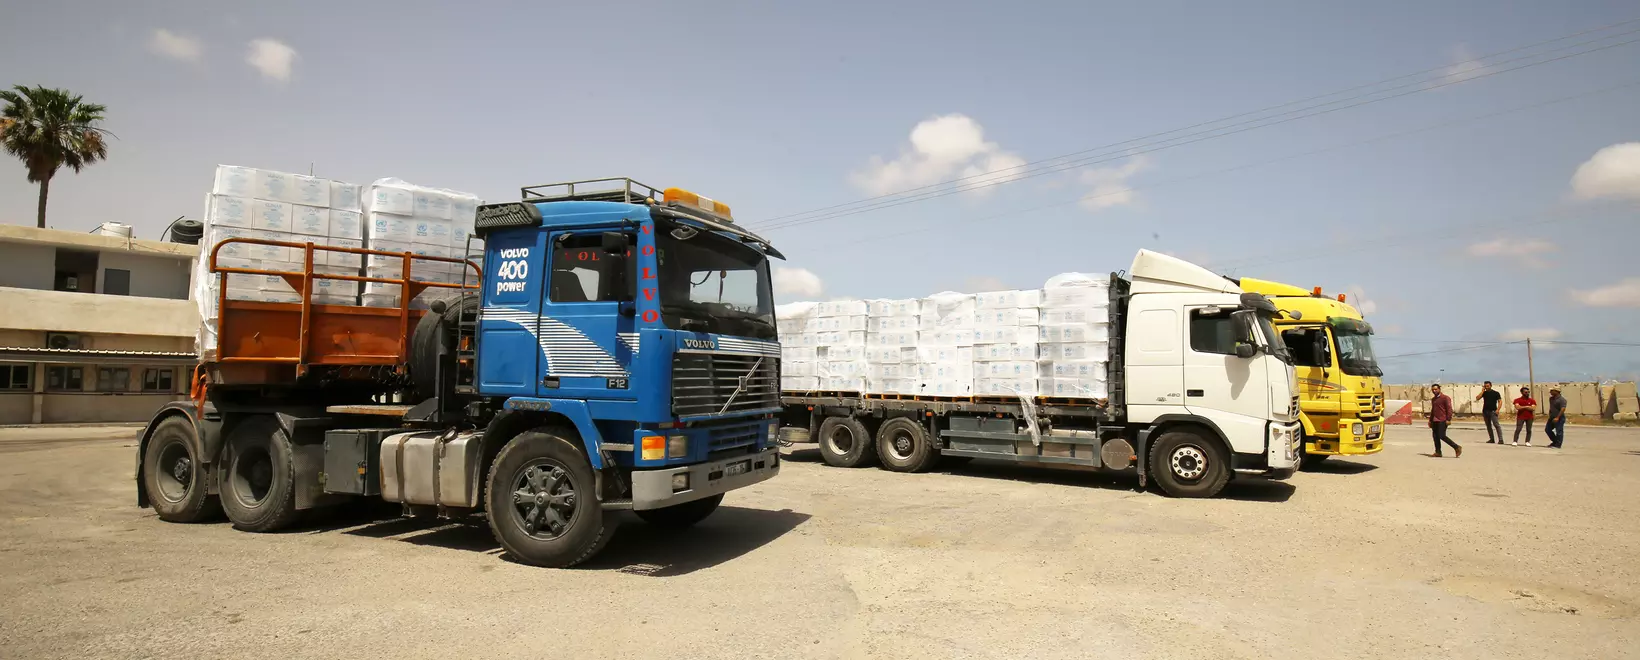 three trucks with human aid